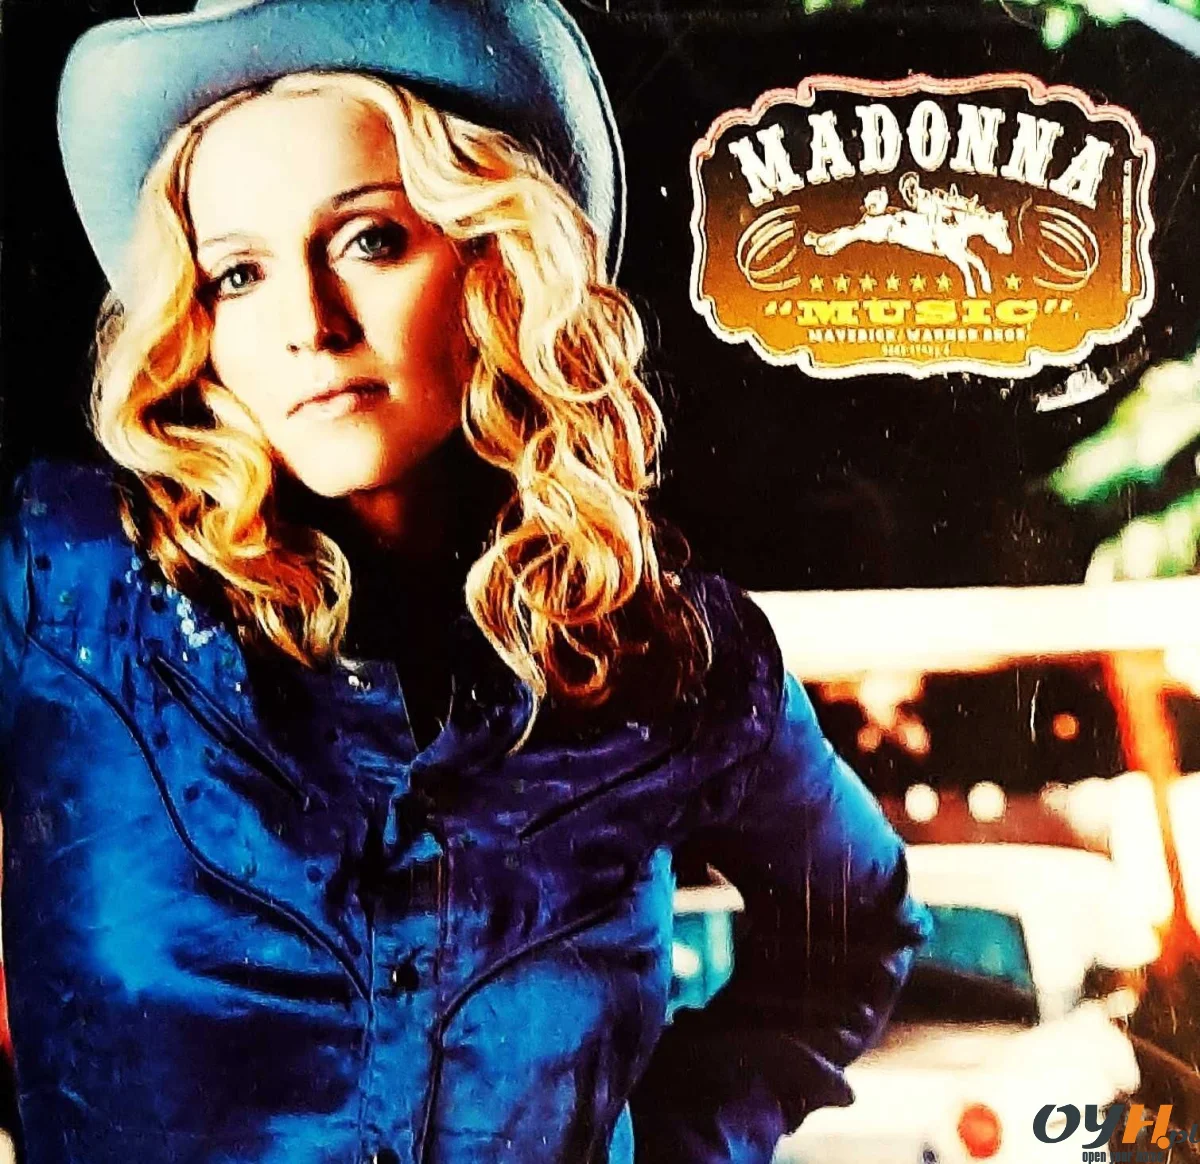 Polecam Album CD Madonna Music CD Nowa !